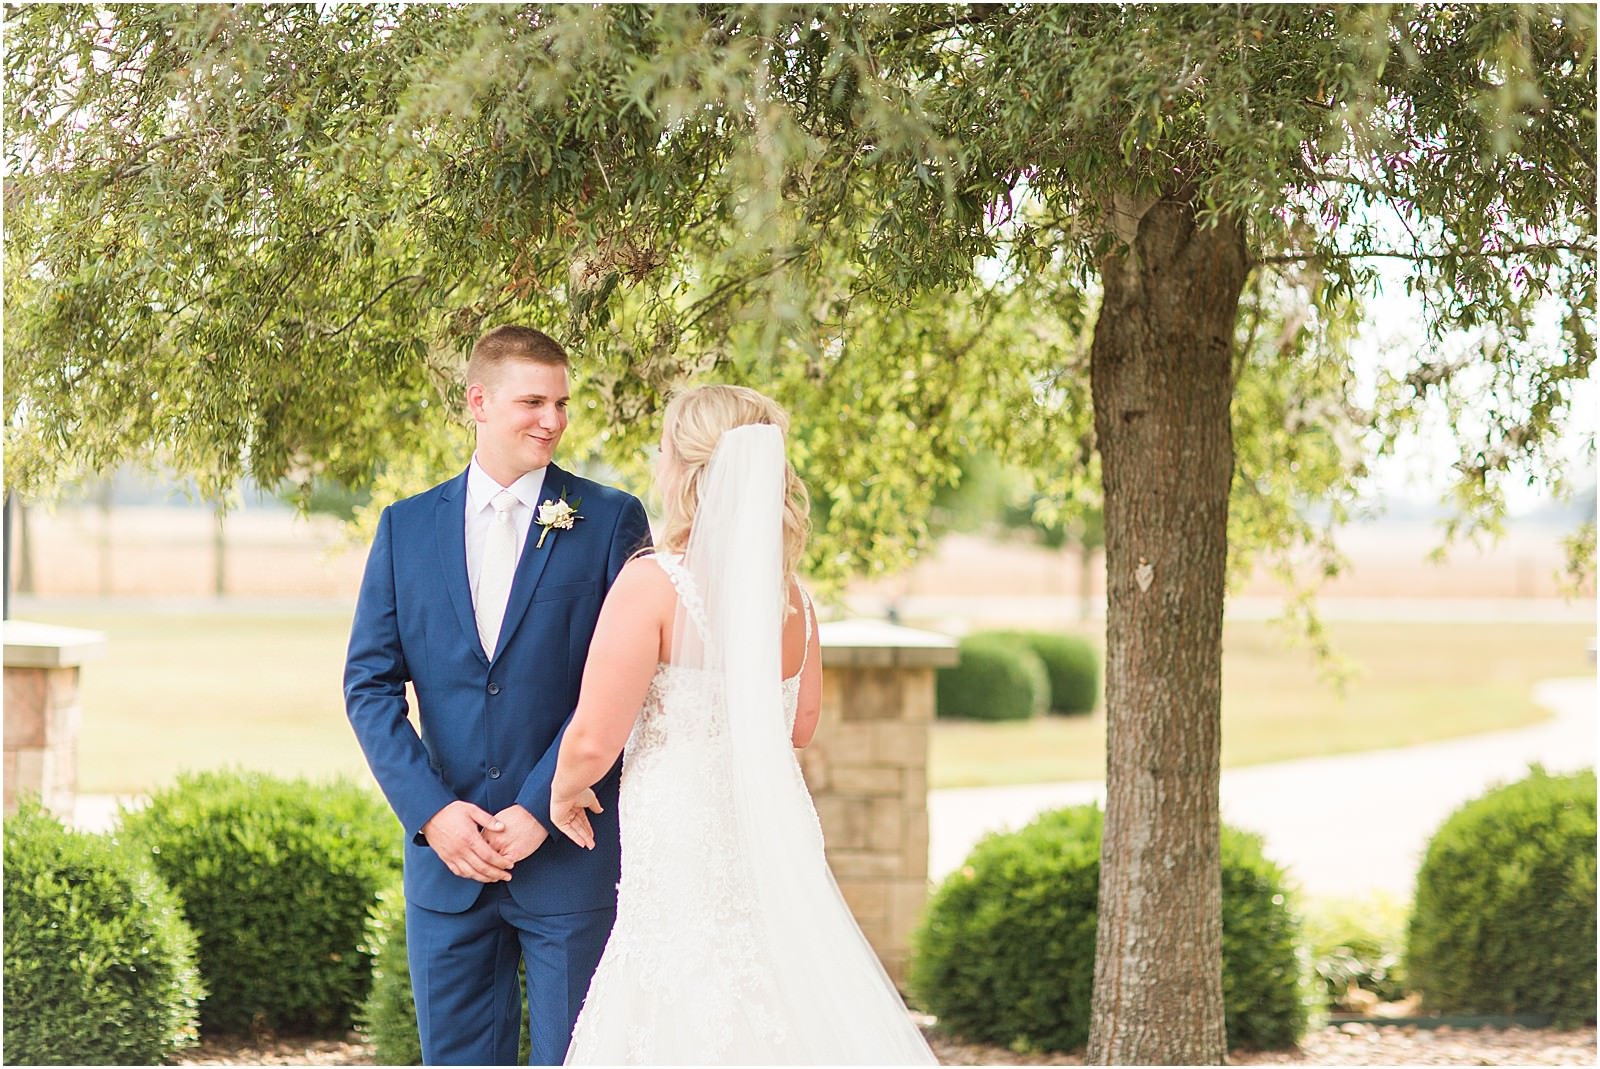 Kelsey and Caleb | Walkers Bluff Winery Wedding | Bret and Brandie Photography034.jpg